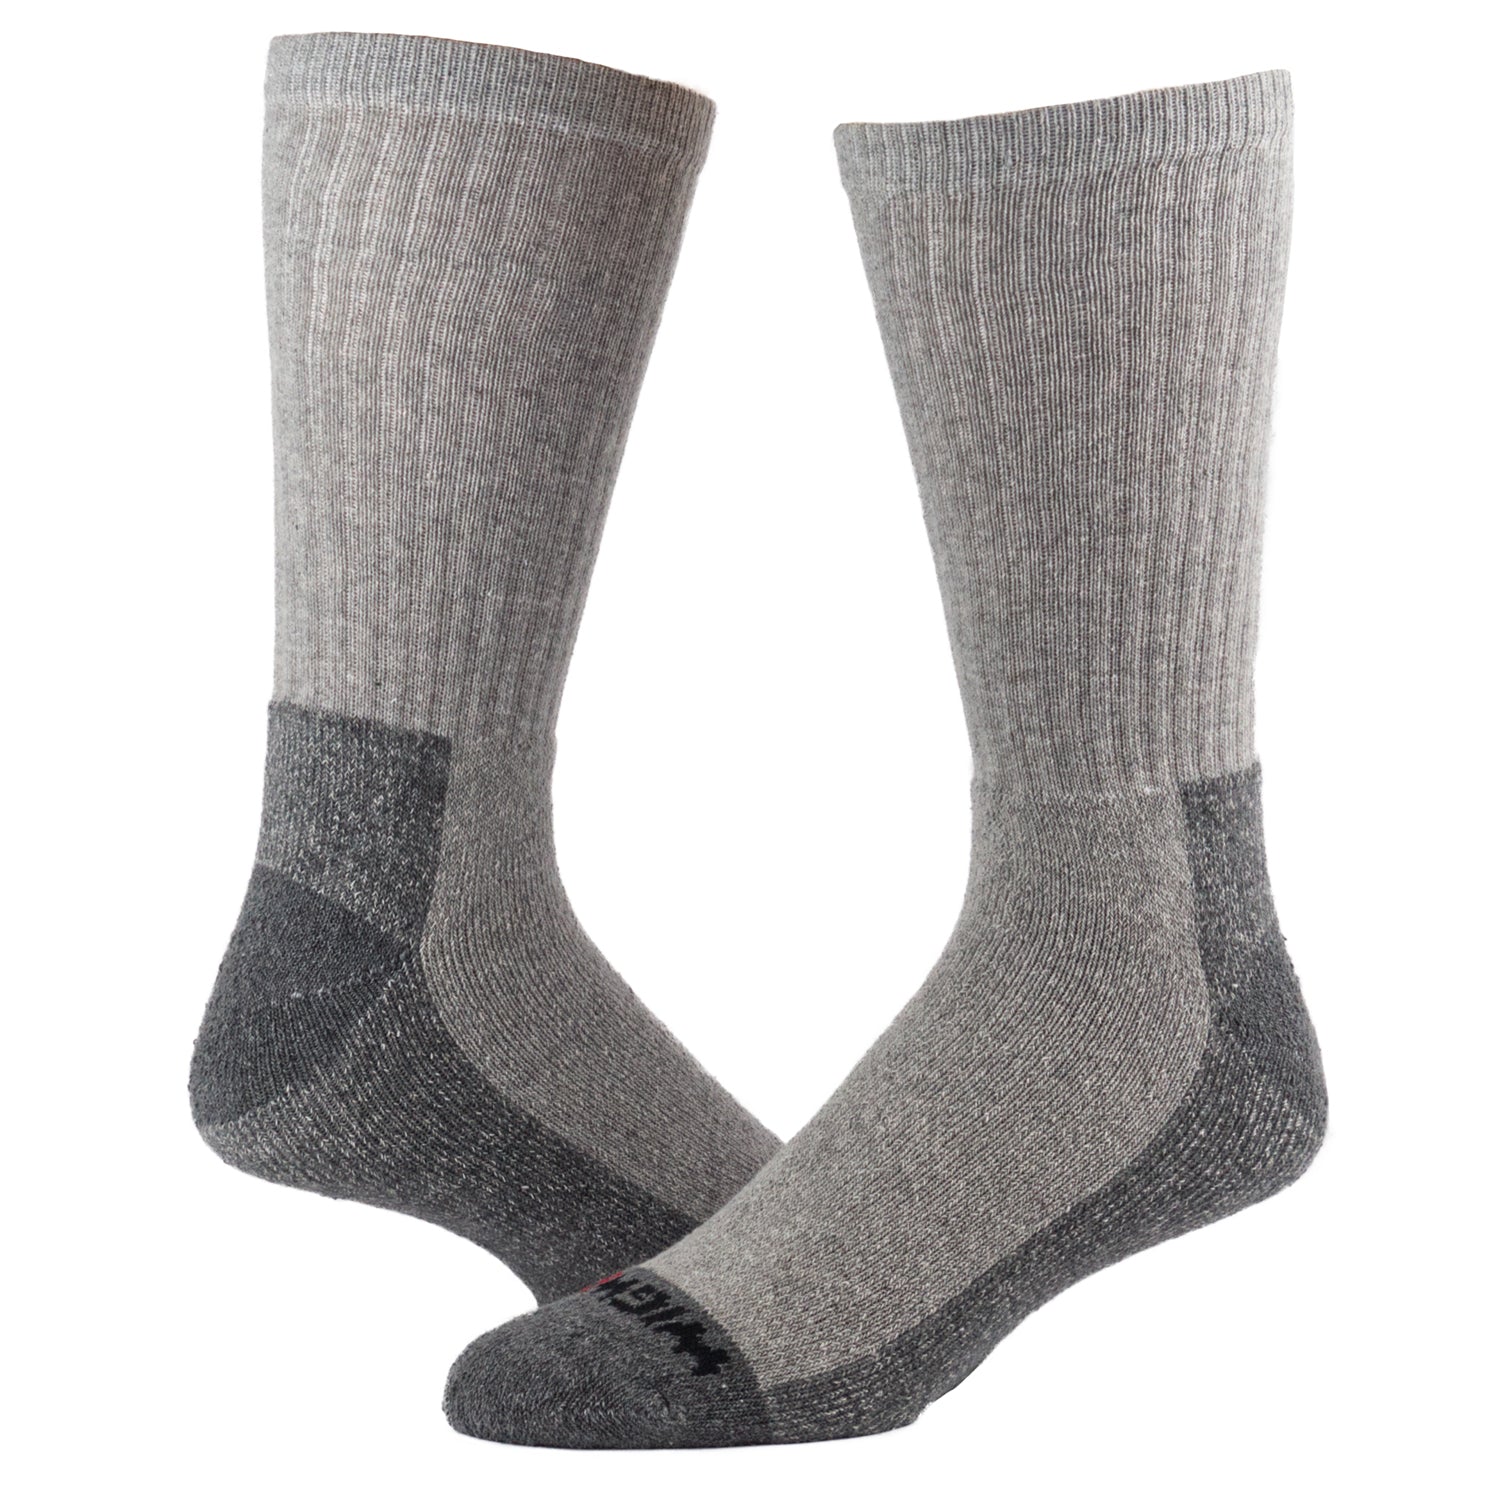 Socks – Work Socks Cotton At Wigwam Crew 3-Pack